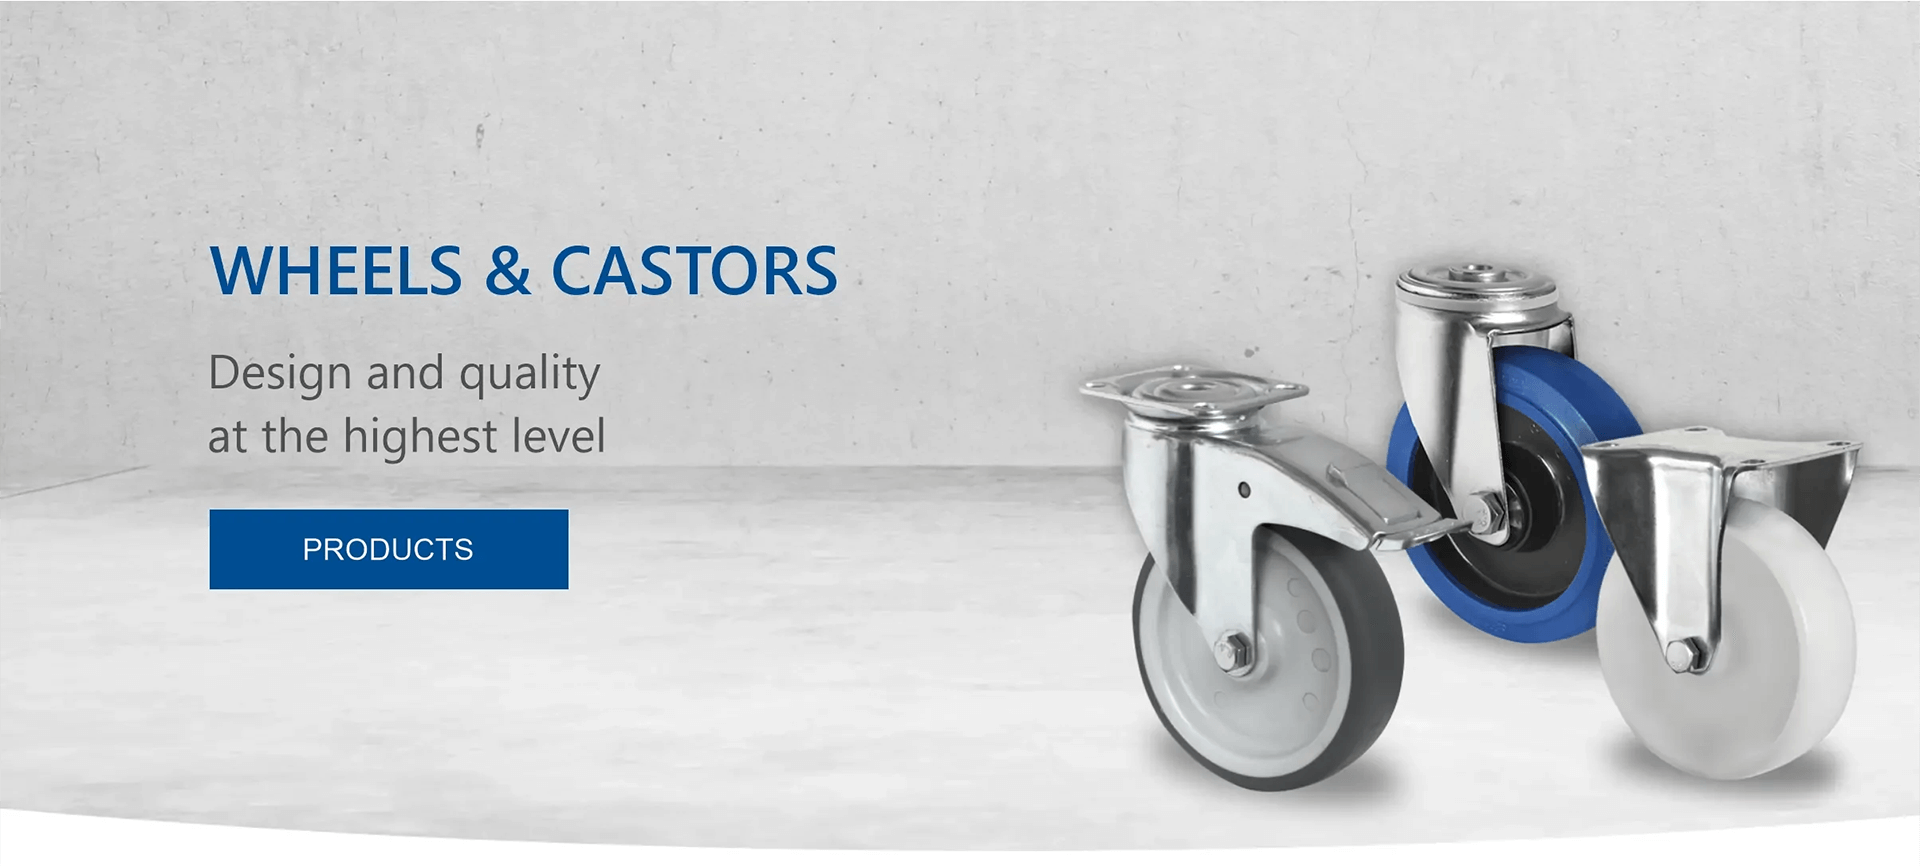 Wheels & Castors Manufacturer